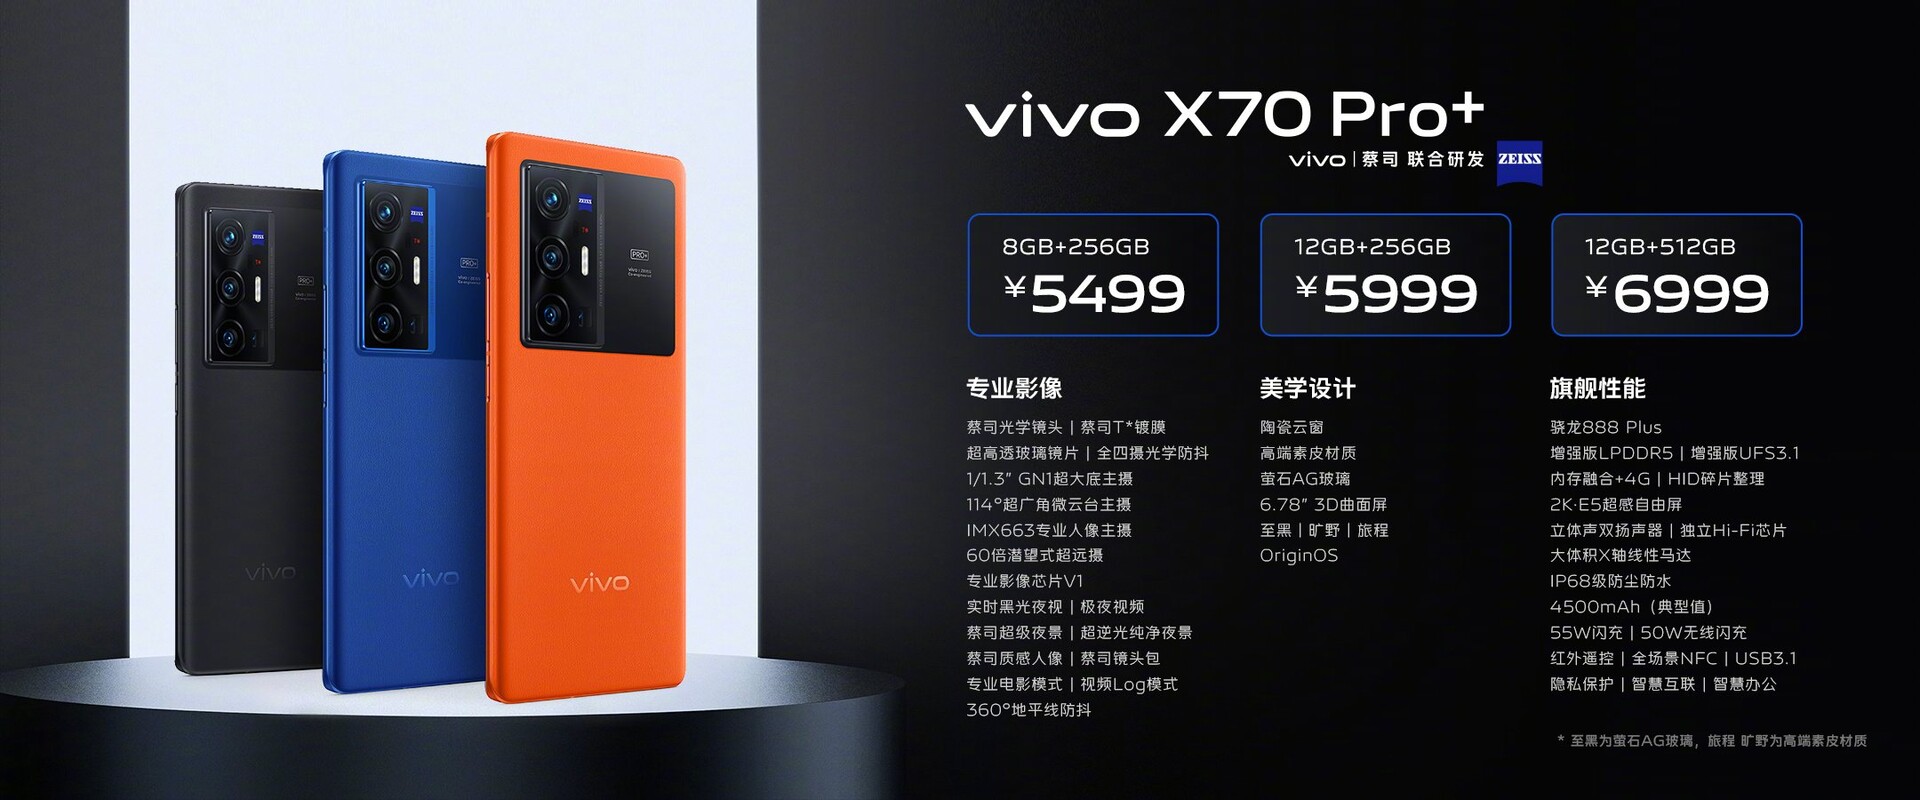 Vivo x pro купить. X70pro+. X70 Pro Plus. Vivo x70 Pro Plus характеристики. X70 Pro.